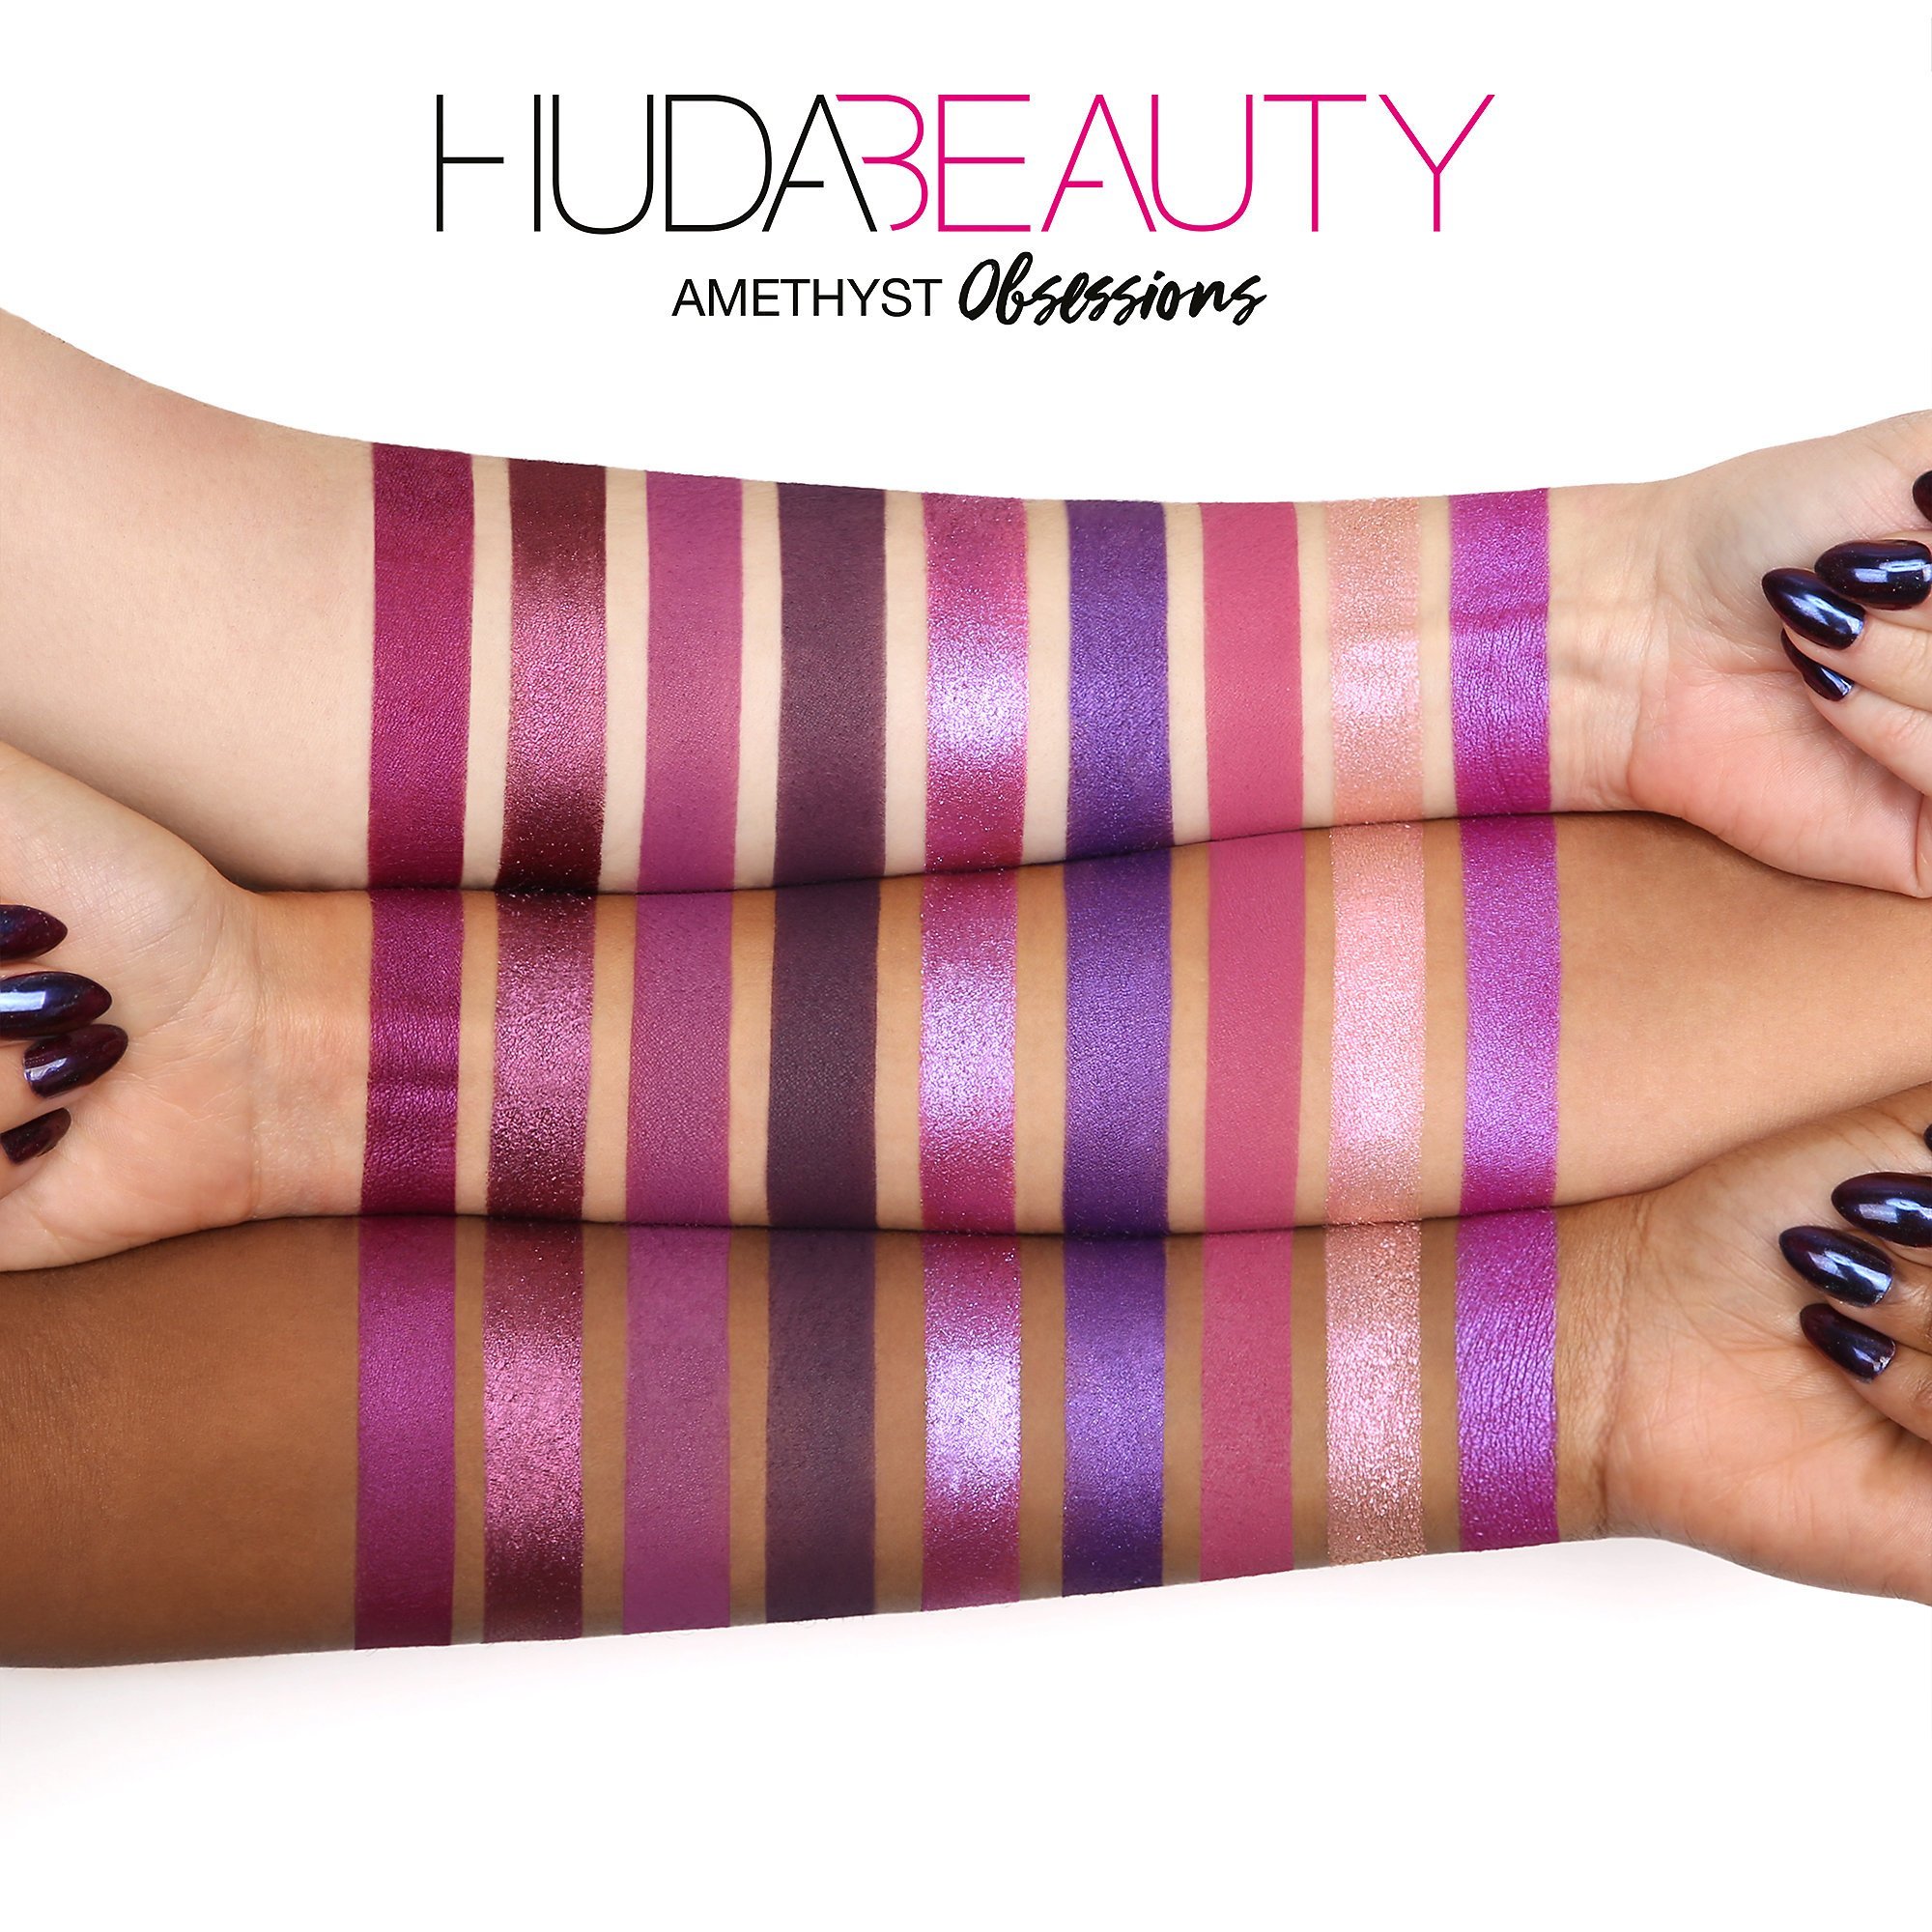 Huda Beauty Amethyst Obsession palette